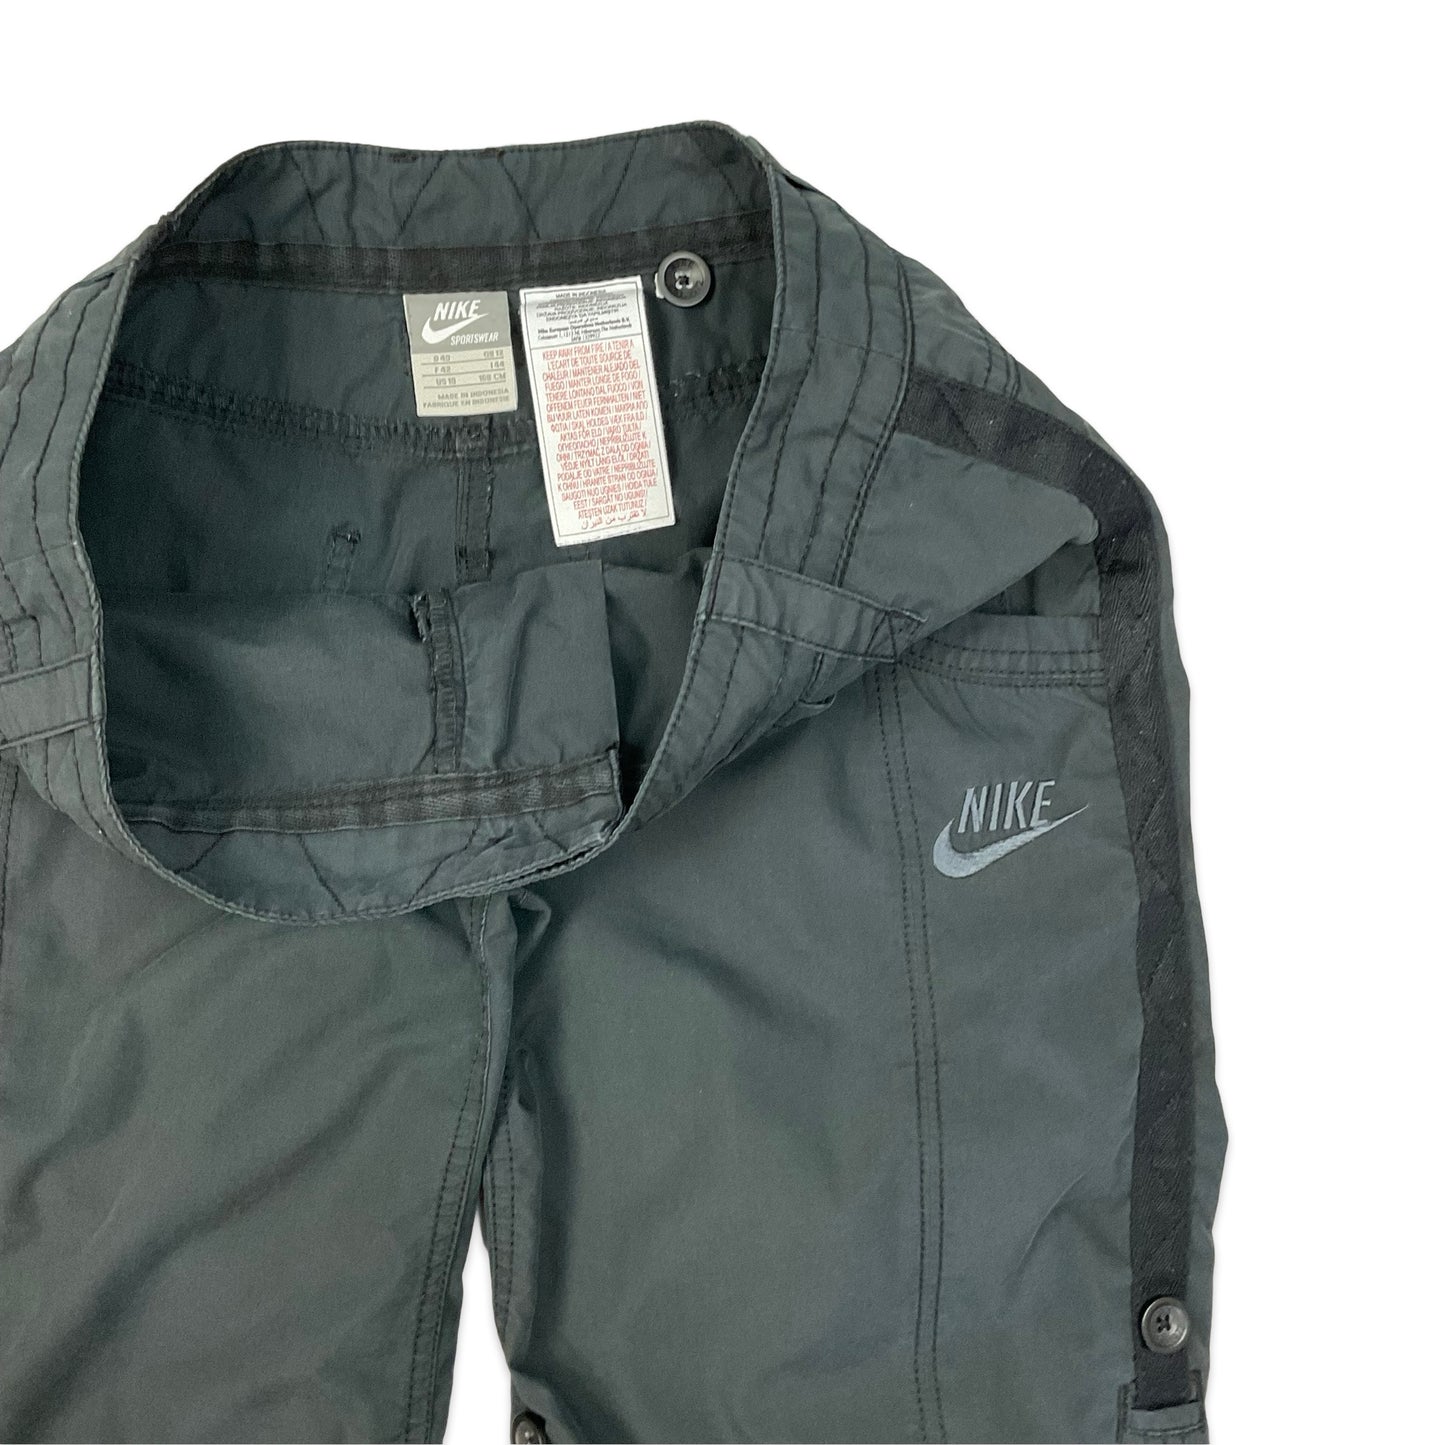 Nike Grey 3/4-length Shorts 14